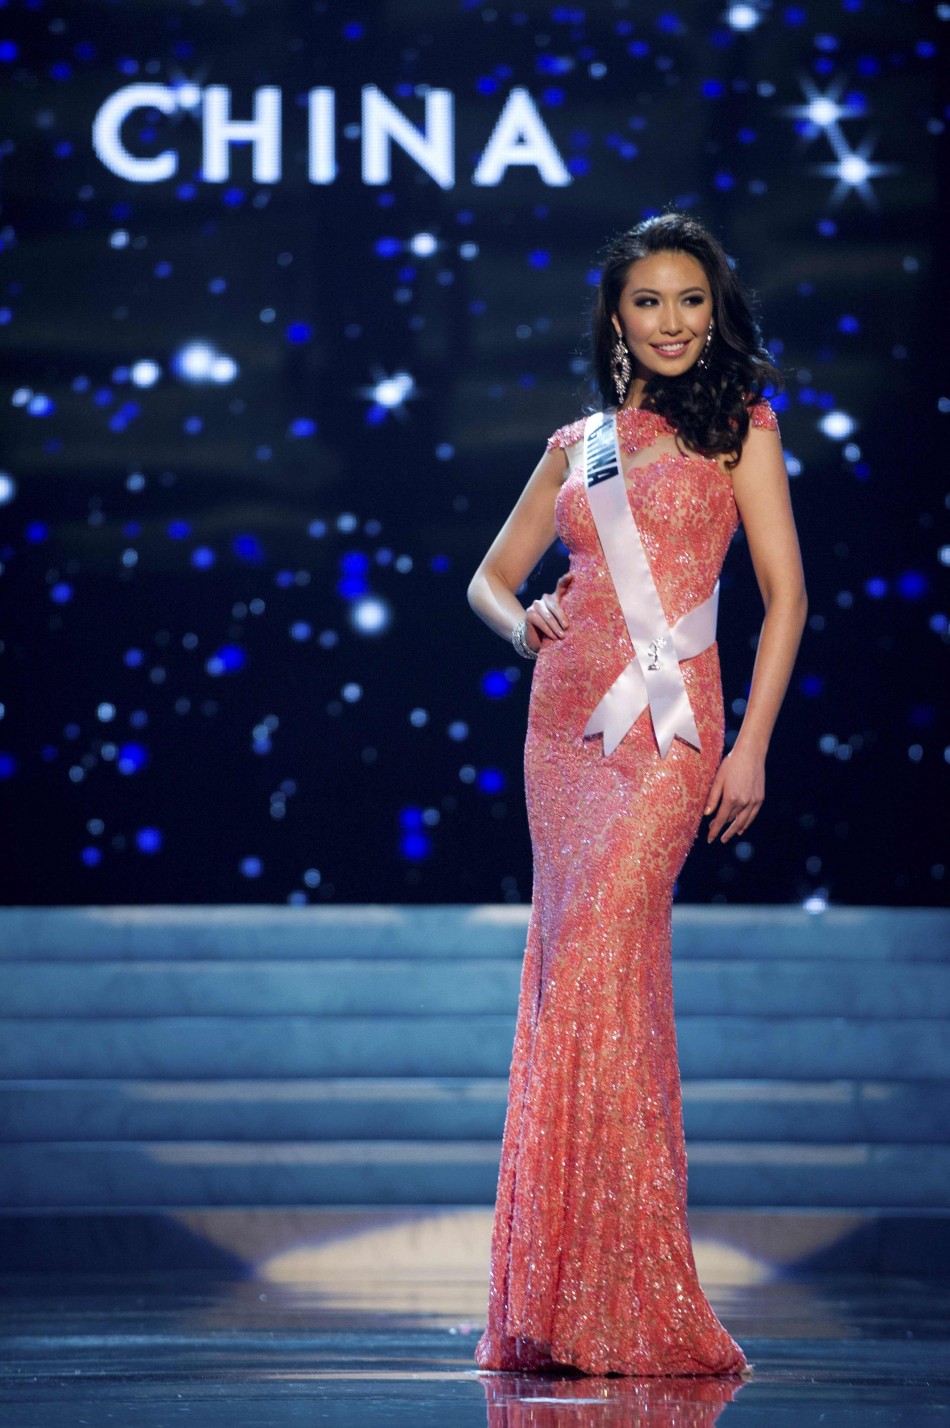 Miss China 2012 Ji Dan Xu competes during 2012 Miss Universe Presentation Show in Las Vegas